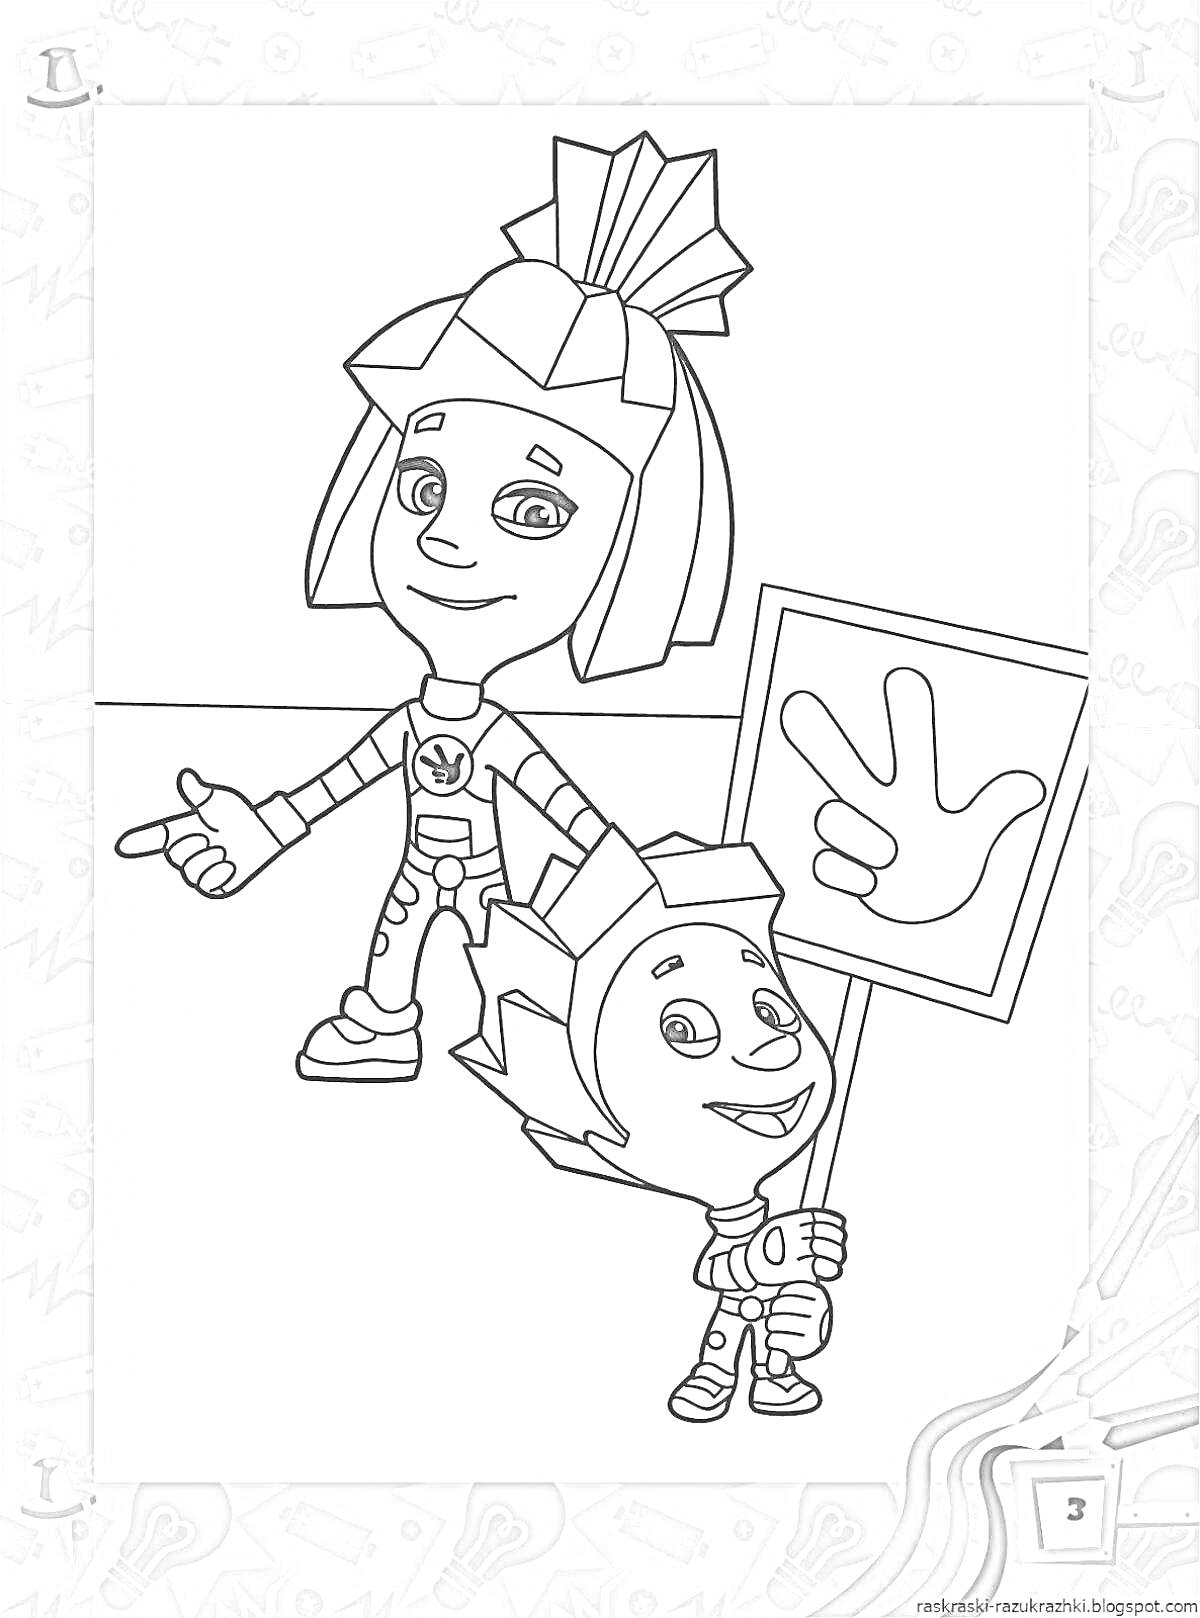 Раскраска Фиксики с табличкой руки (персонажи с ободком на голове и табличкой руки)